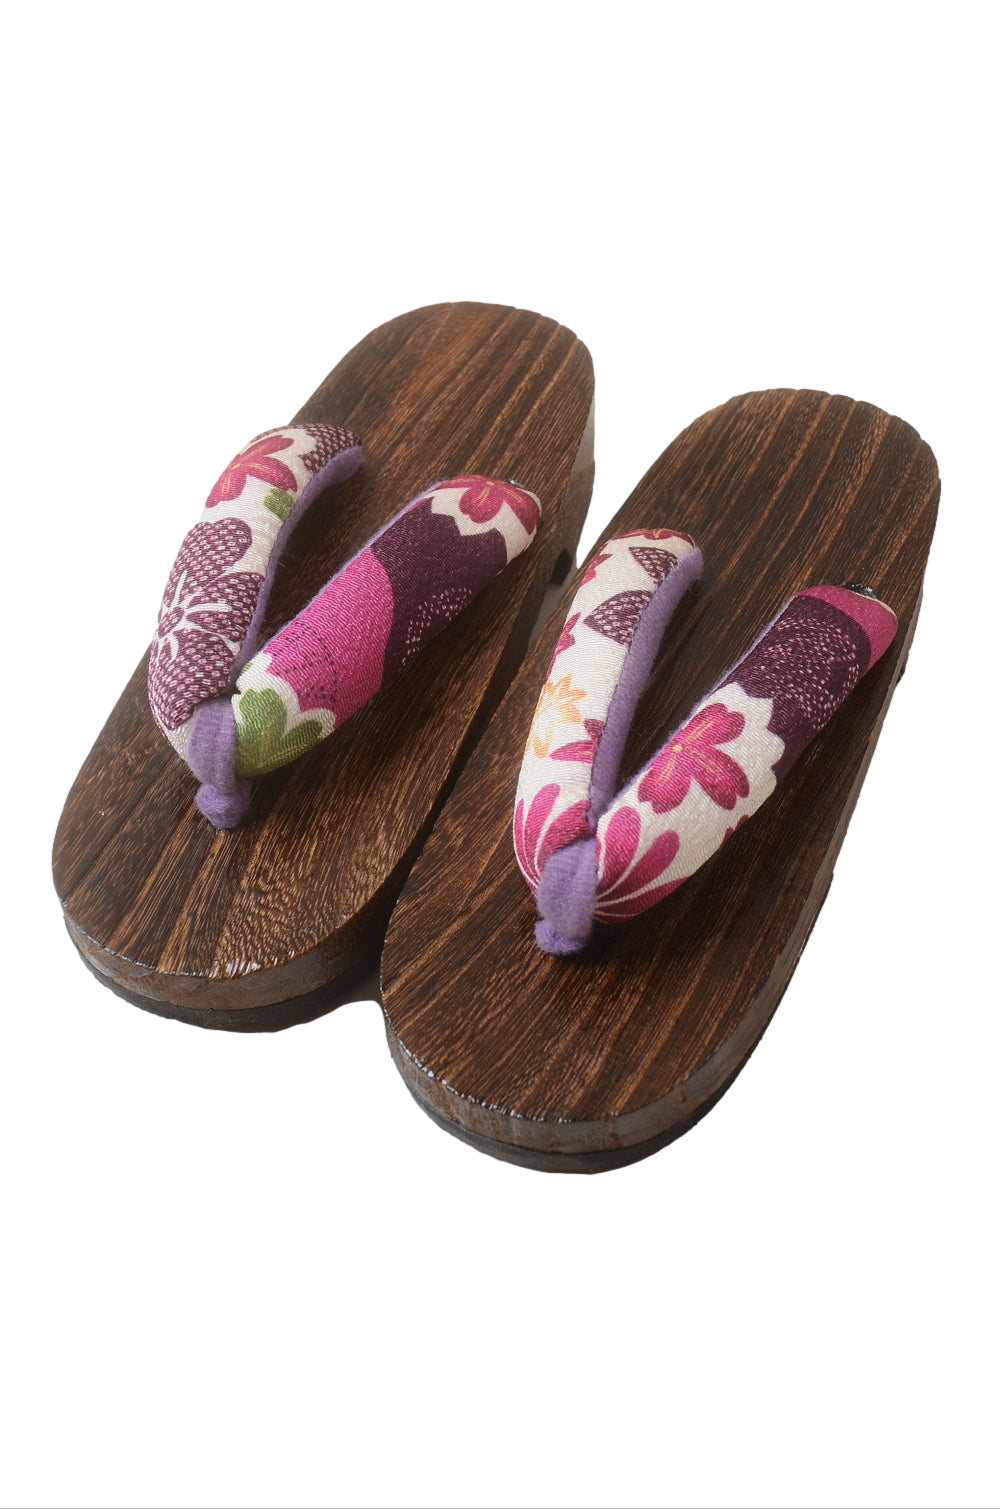 Modern Geta Sandals | Japan Avenue